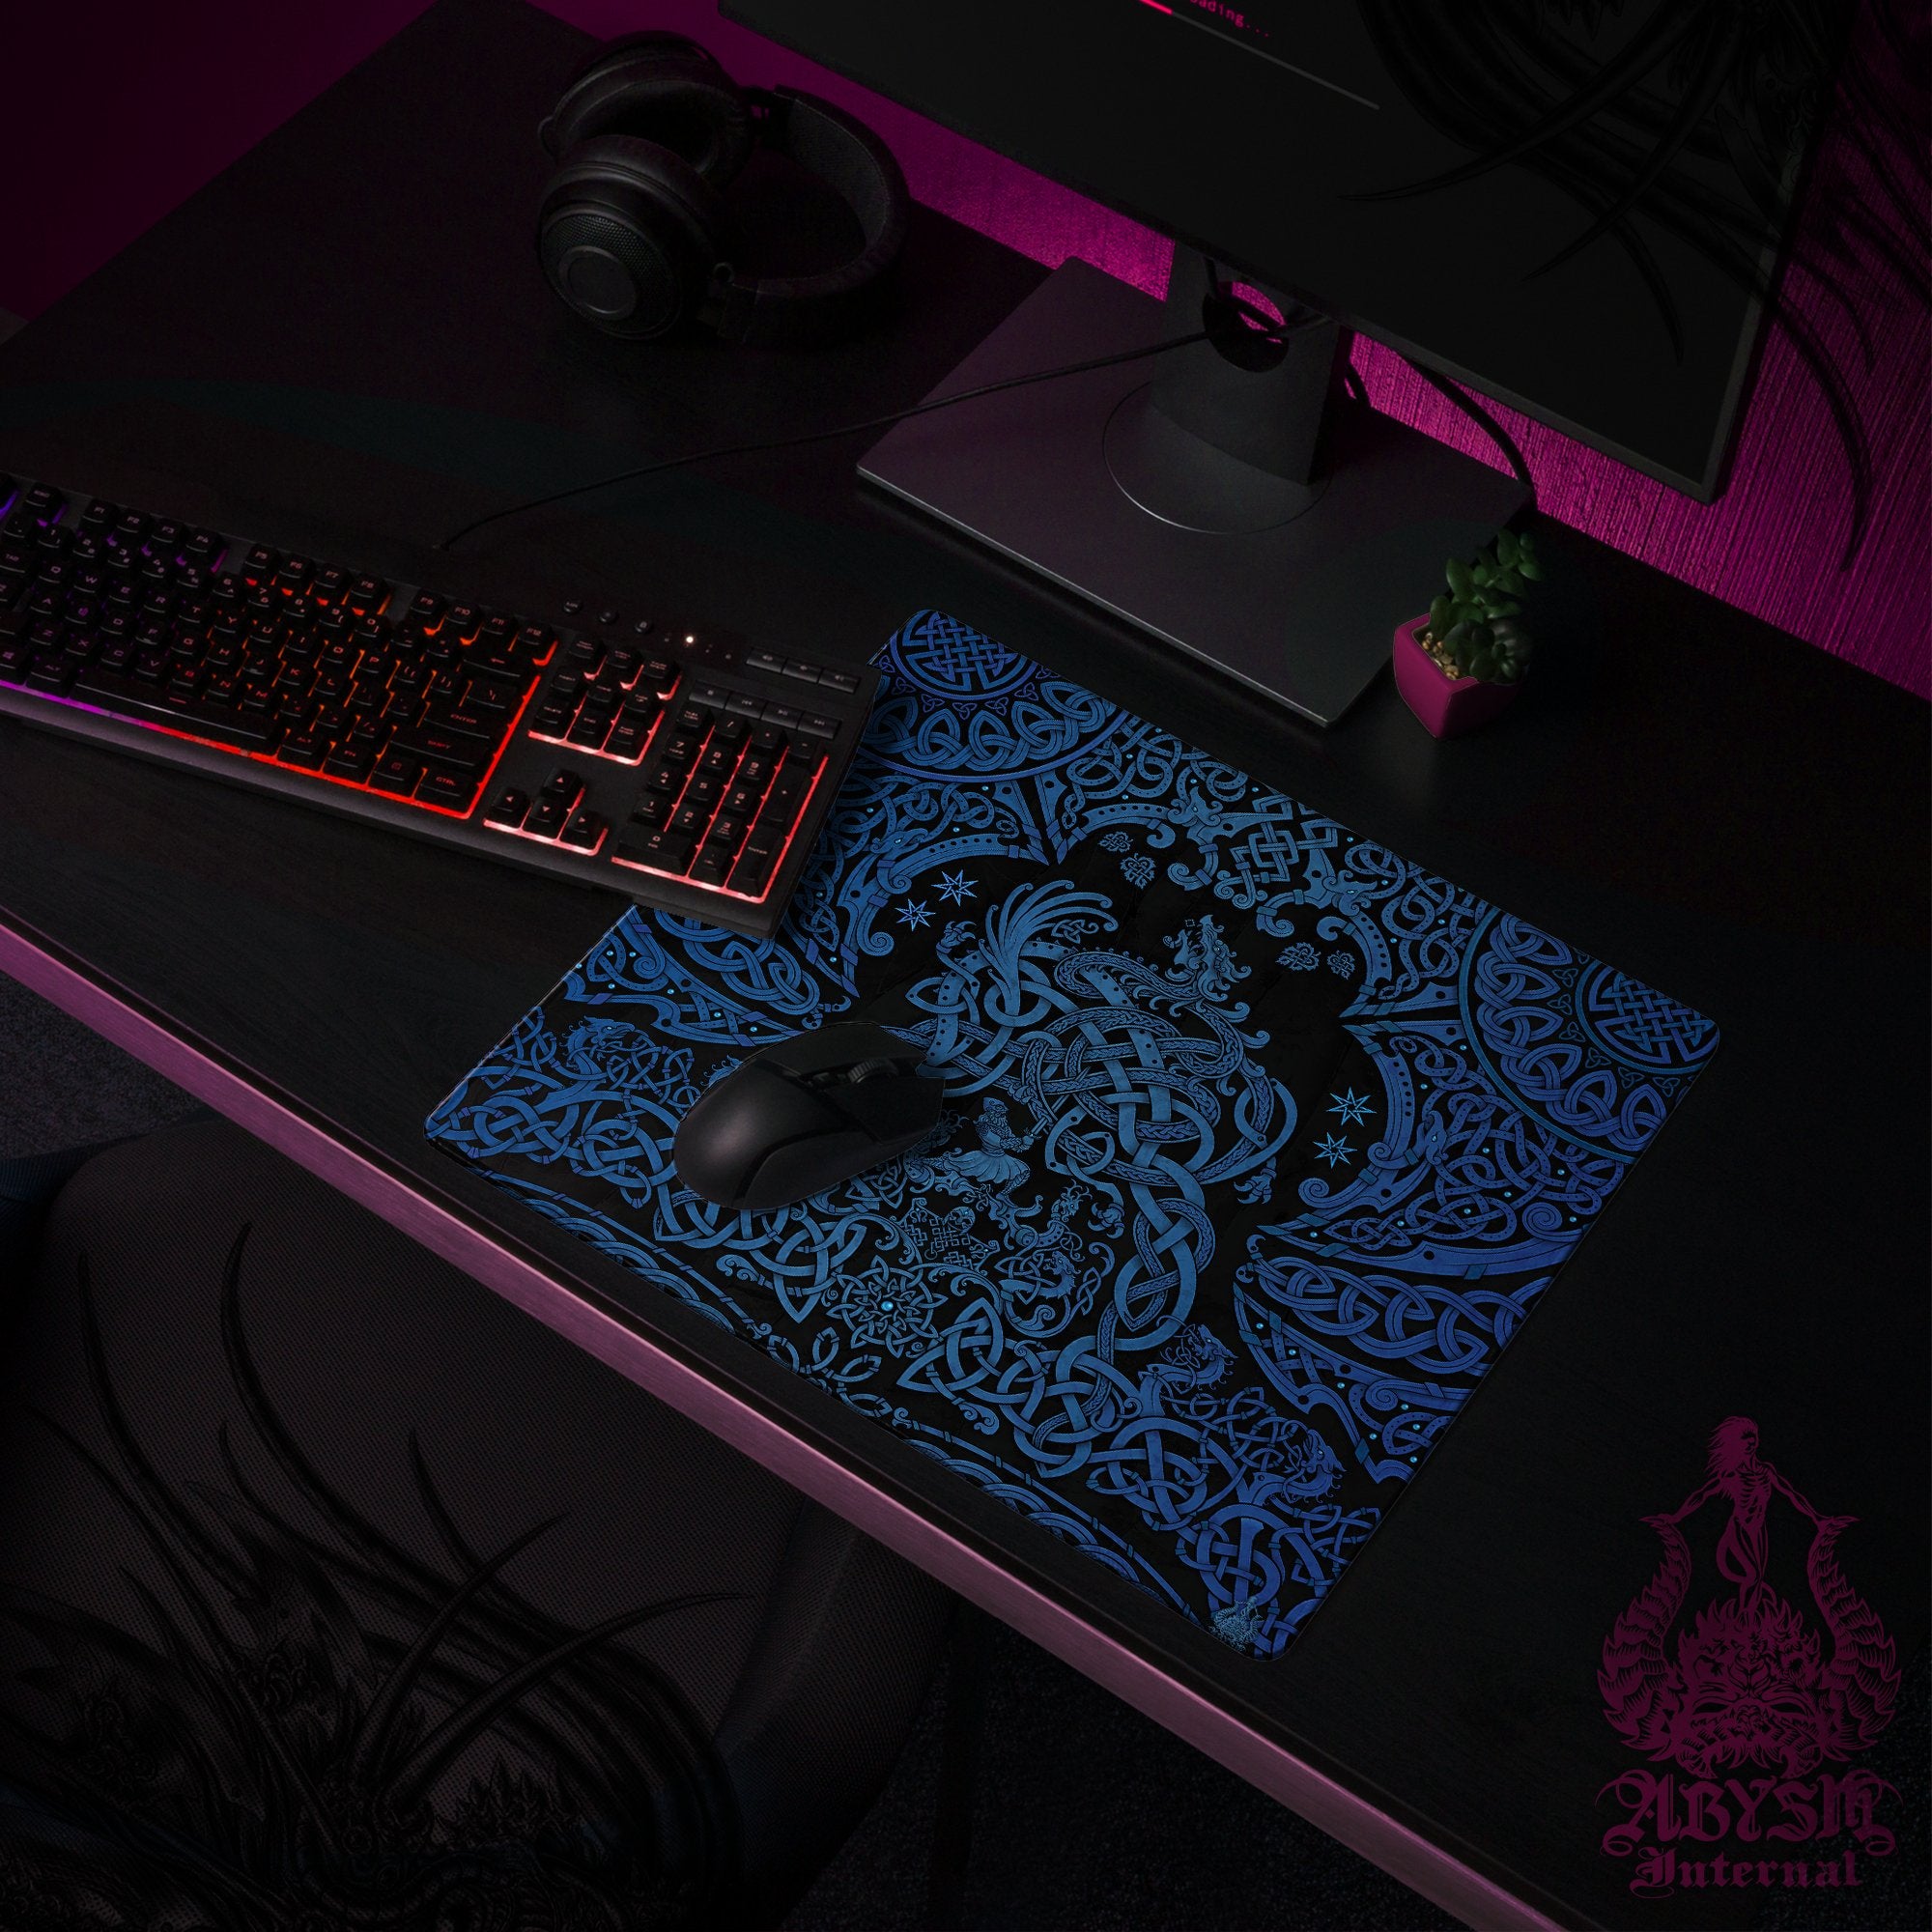 Viking Dragon Gaming Mouse Pad, Norse Knotwork Desk Mat, Nordic Table Protector Cover, Fafnir Workpad, Art Print - Black Blue - Abysm Internal